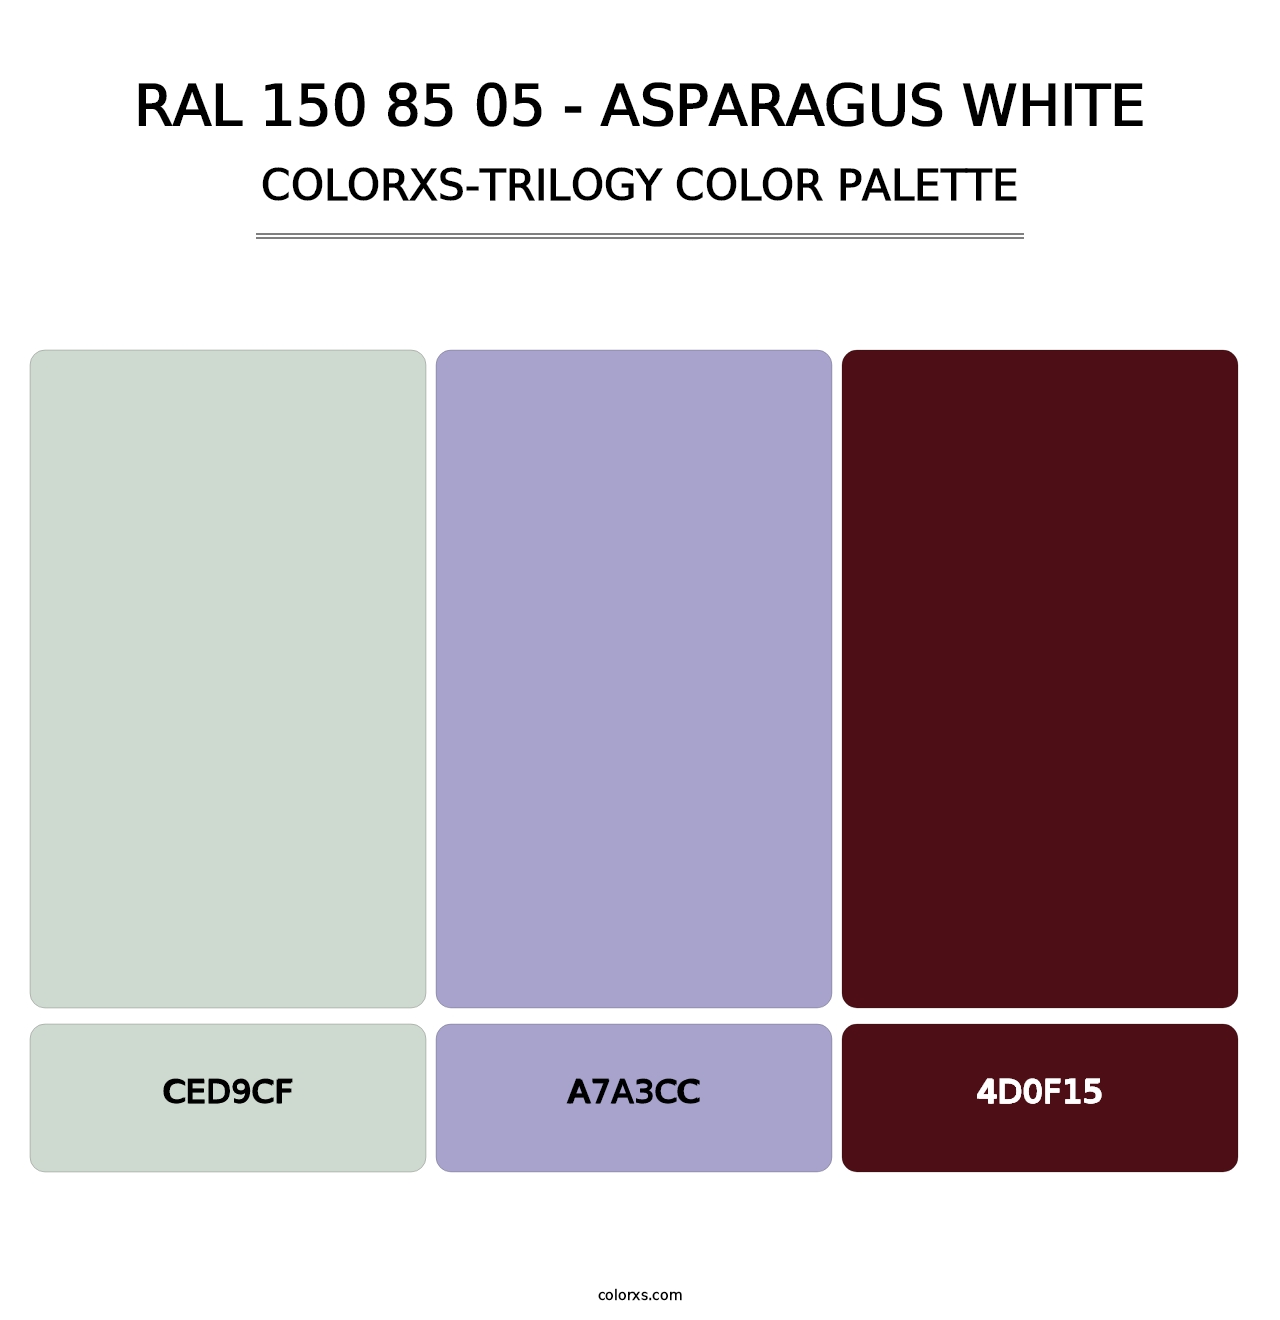 RAL 150 85 05 - Asparagus White - Colorxs Trilogy Palette